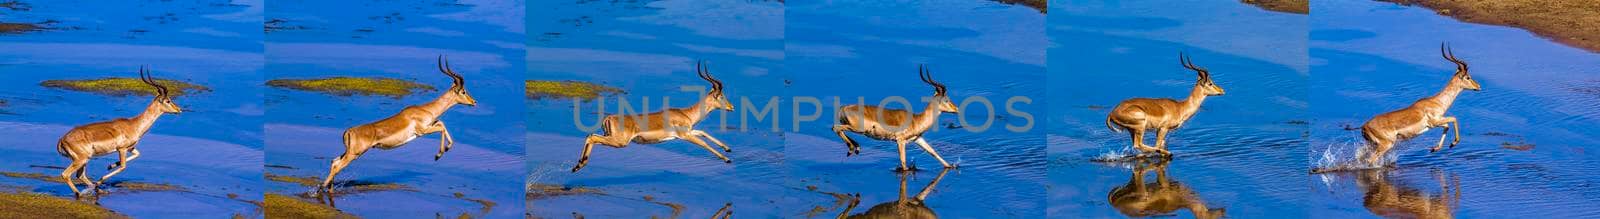 Common Impala in Kruger National park, South Africa ; Specie Aepyceros melampus family of Bovidae